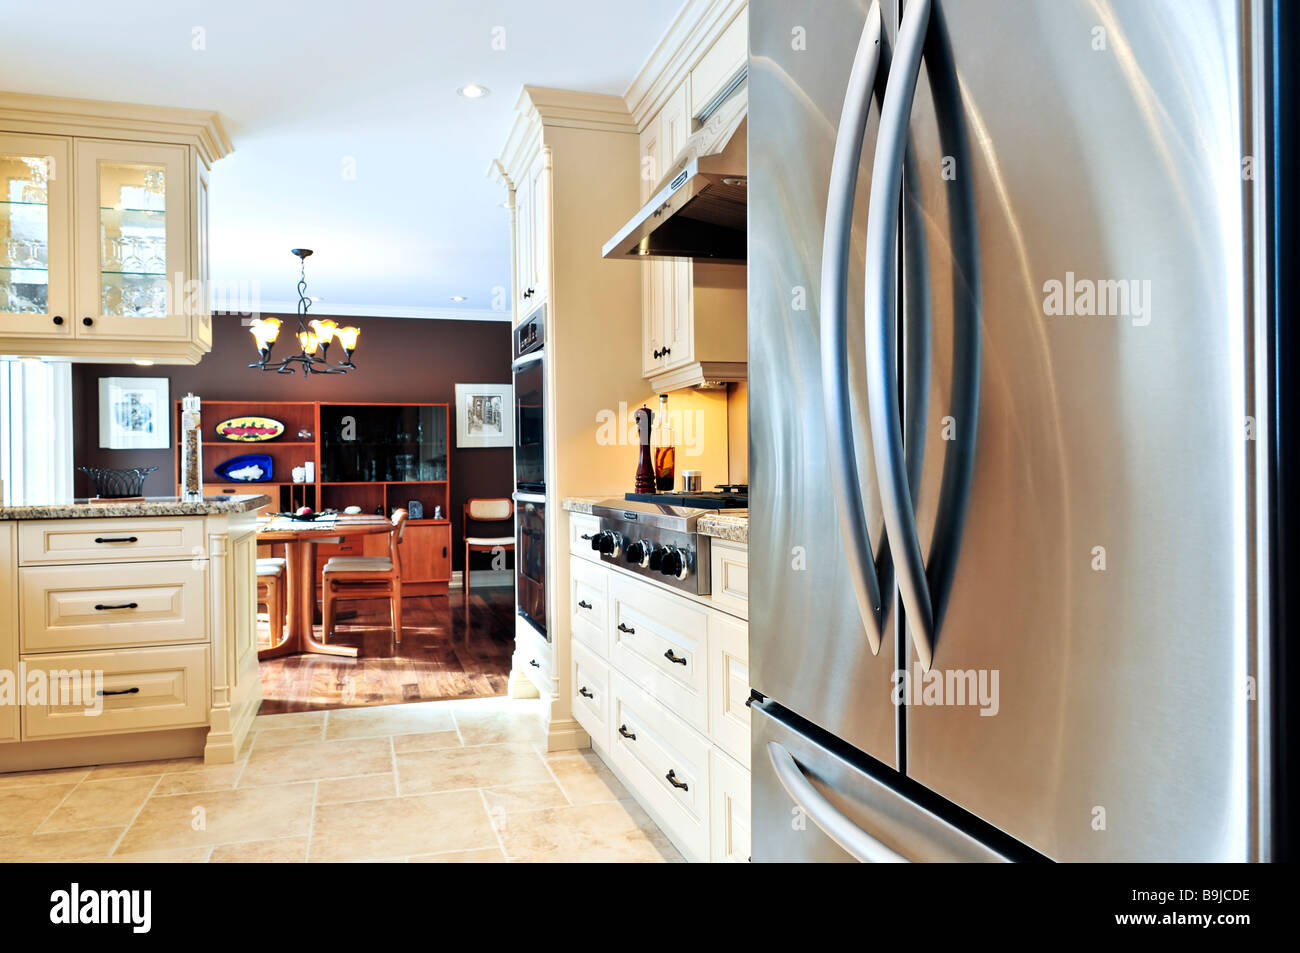 Interior of modern luxury kitchen with stainless steel appliances Stock Photo